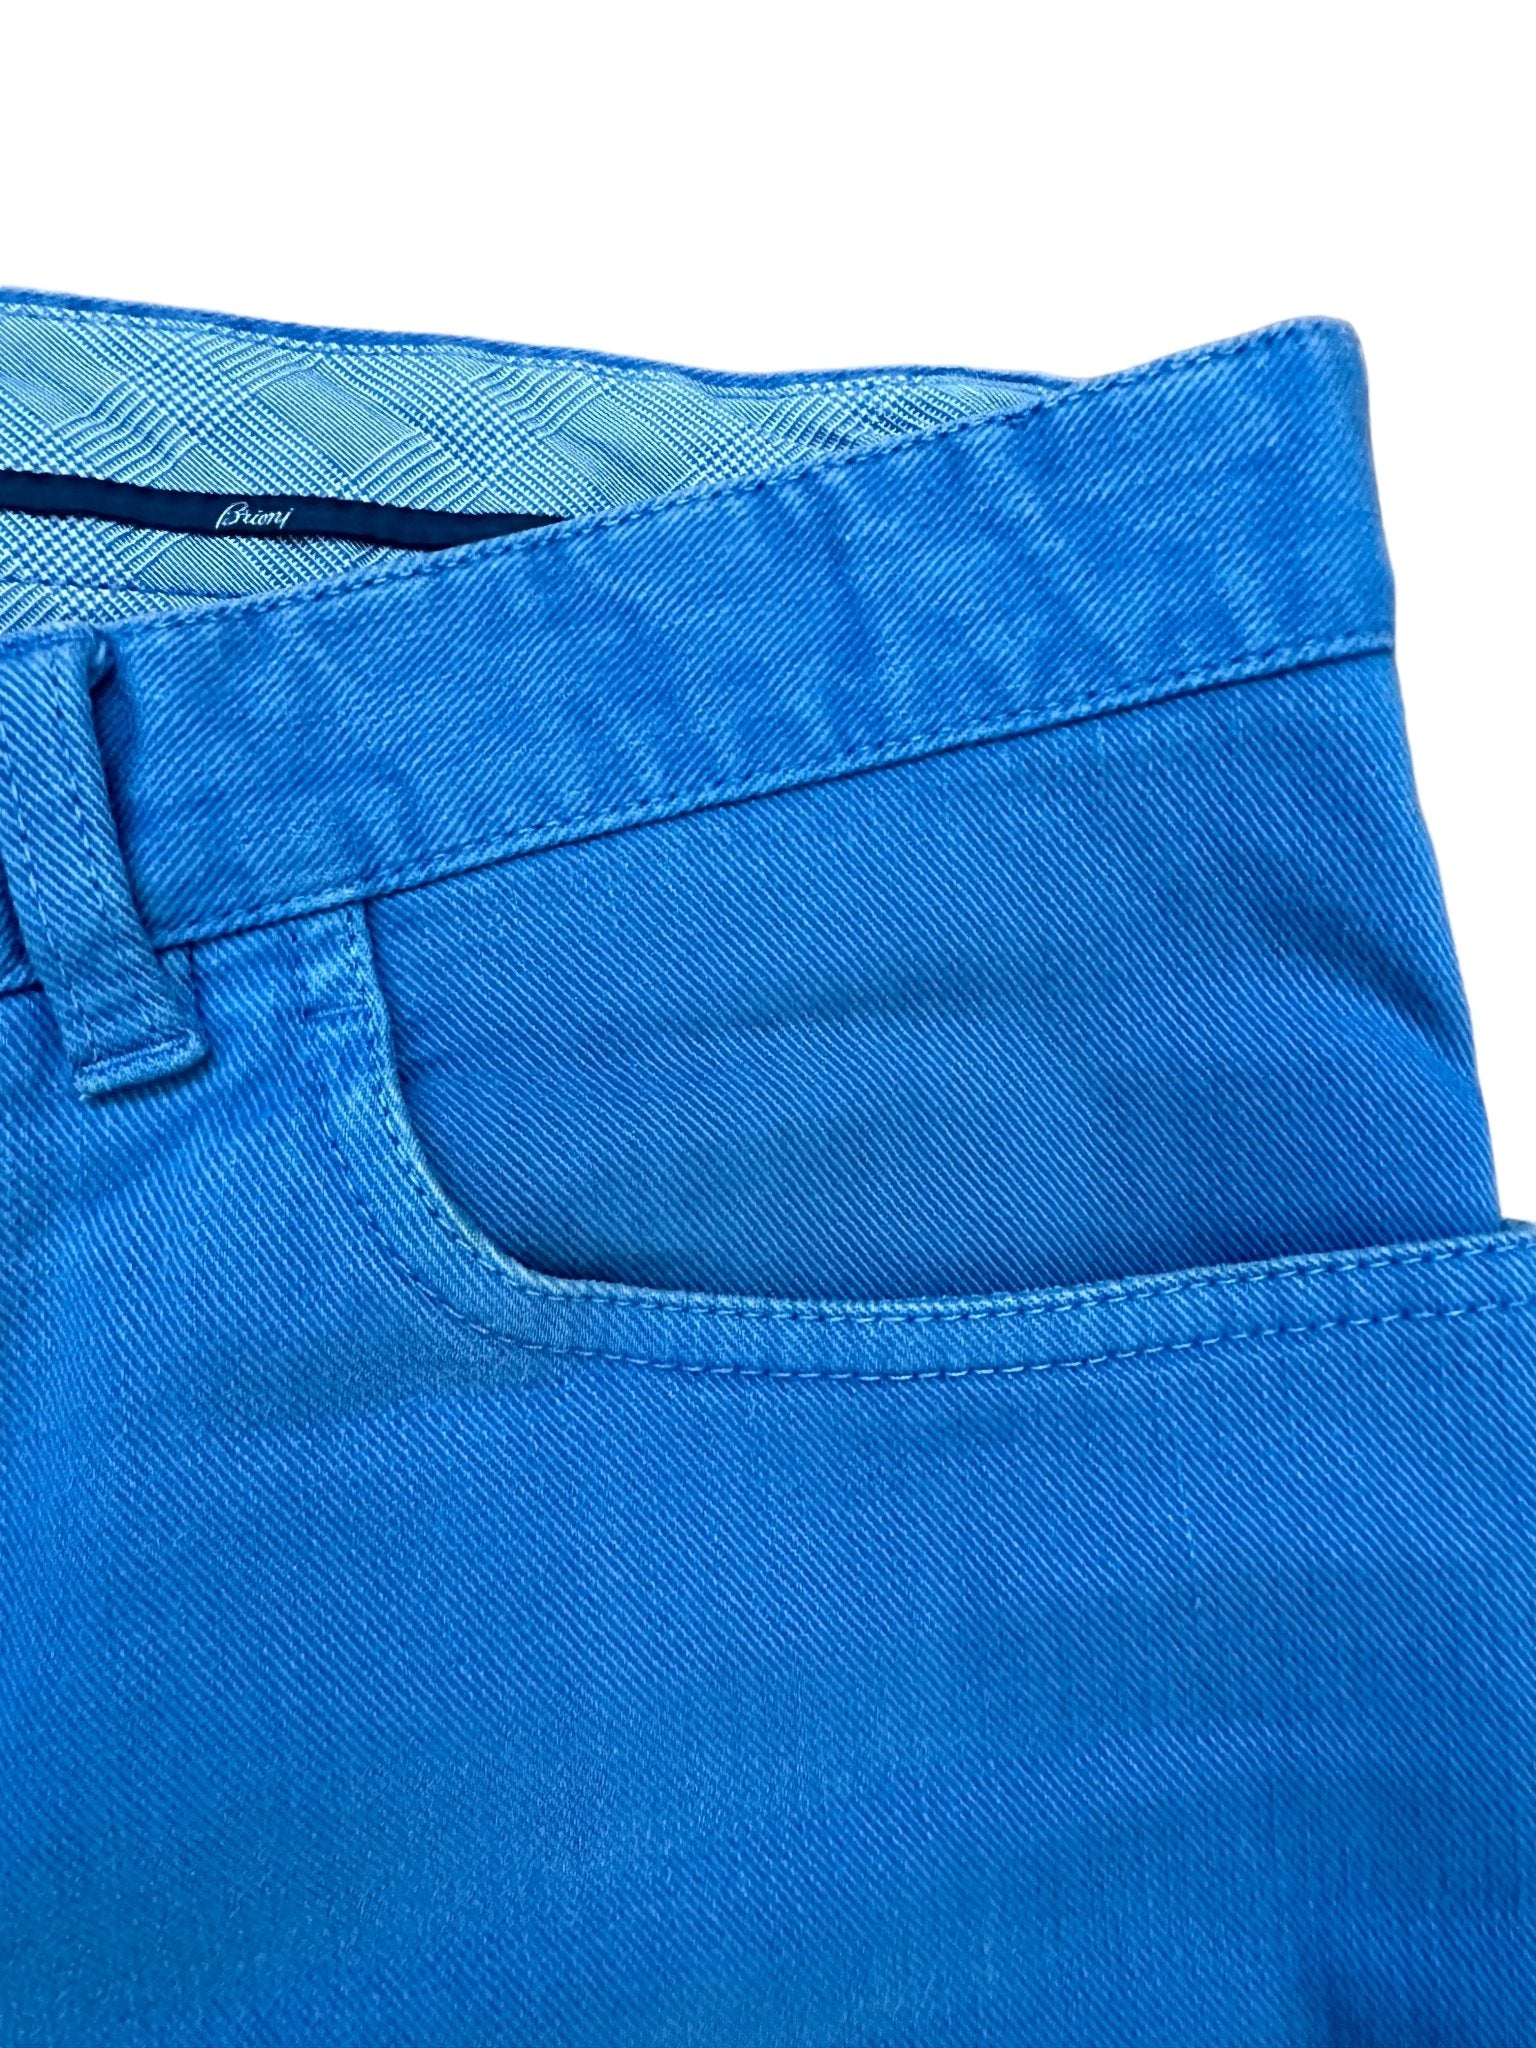 Brioni Hose blau - 24/7 Clothing